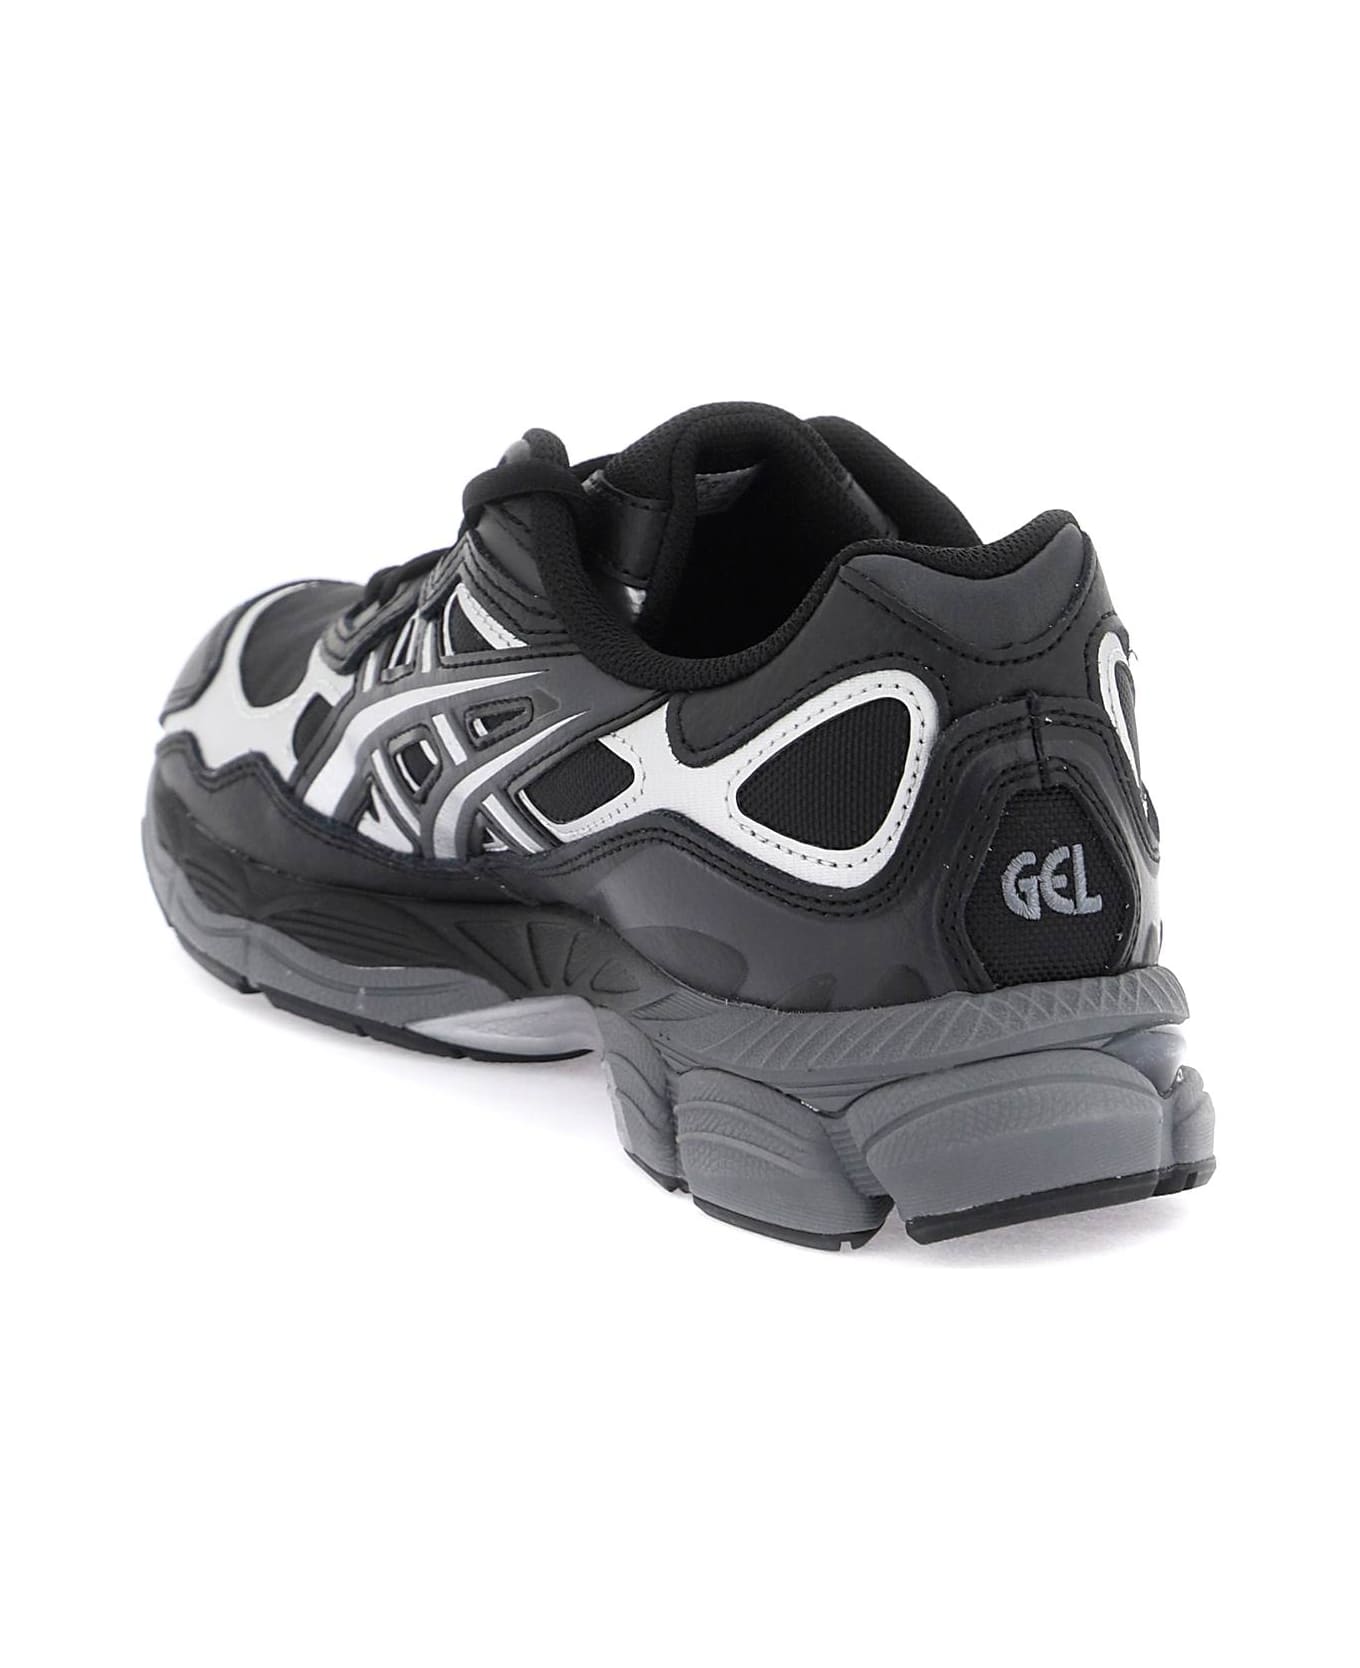 Asics Gel-kayano 14 Sneakers - BLACK GRAPHITE GREY (Black)